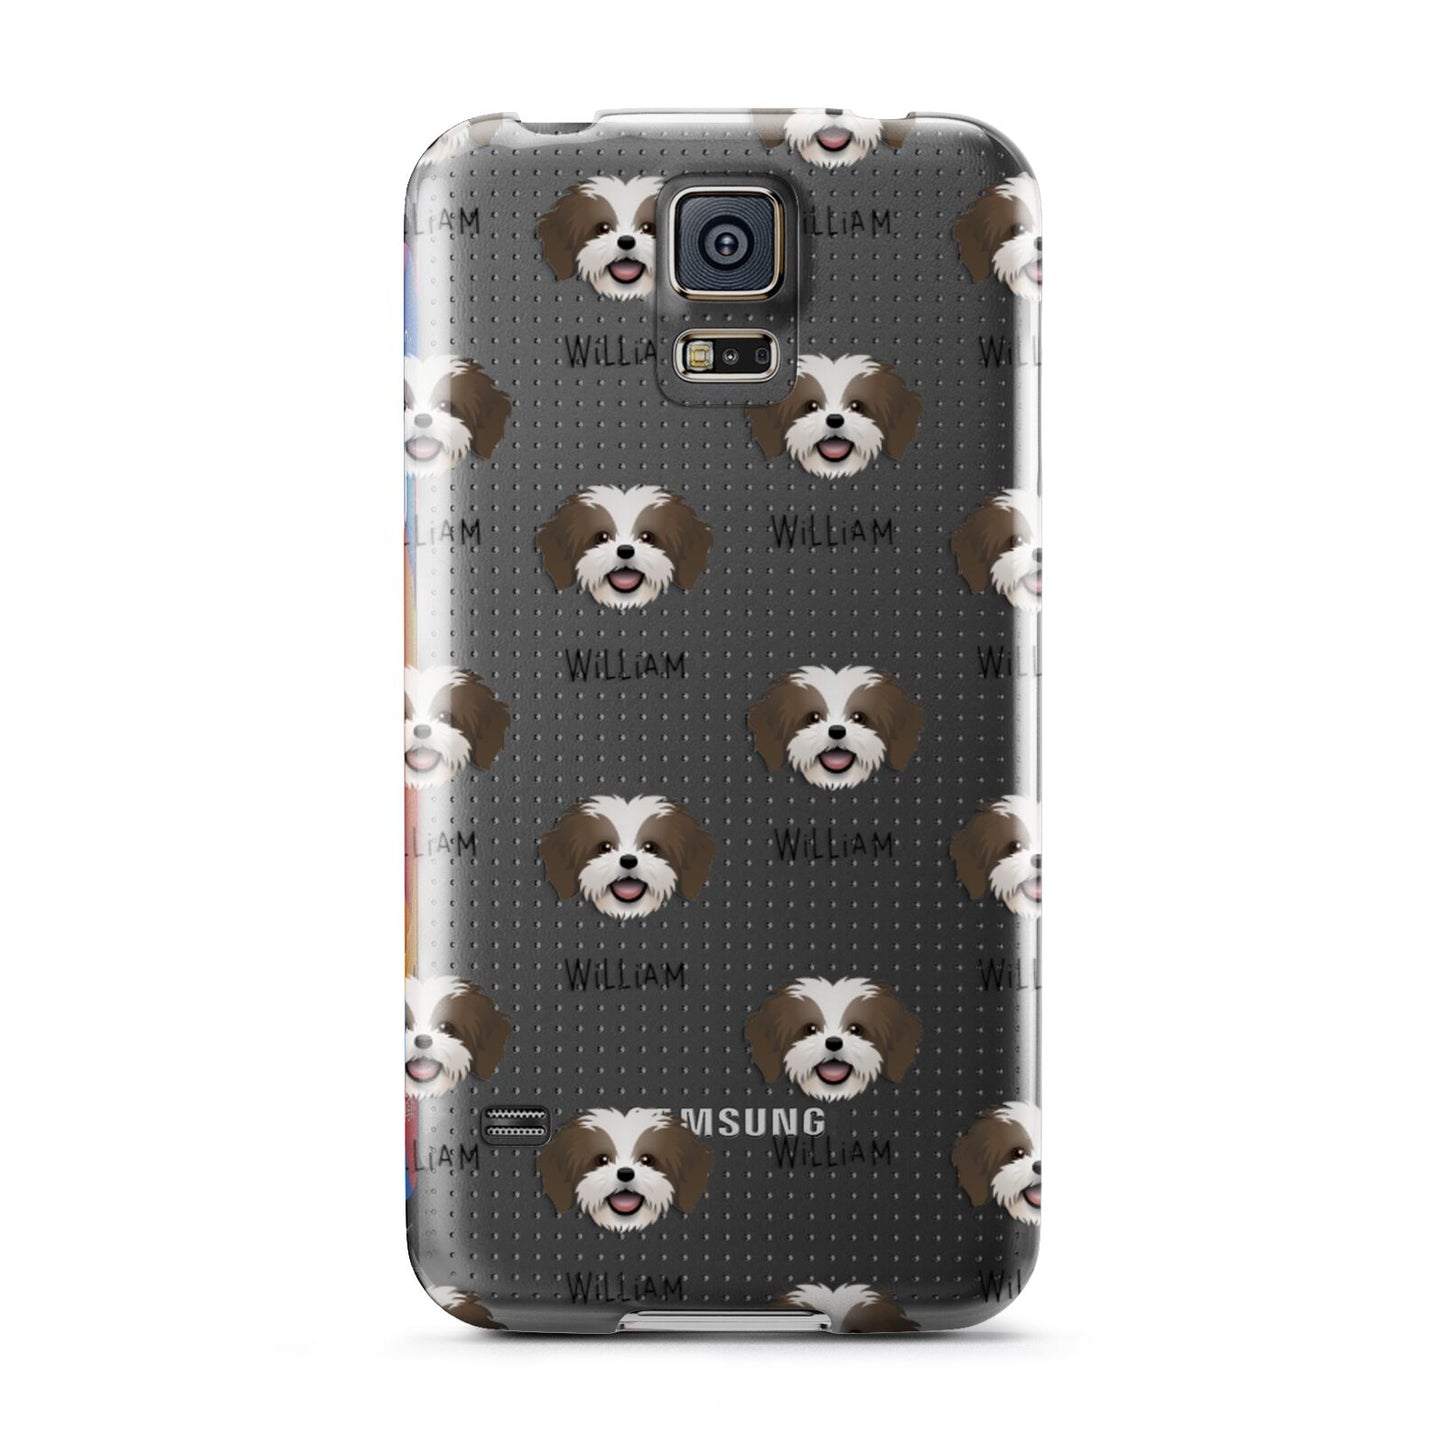 Cava Tzu Icon with Name Samsung Galaxy S5 Case